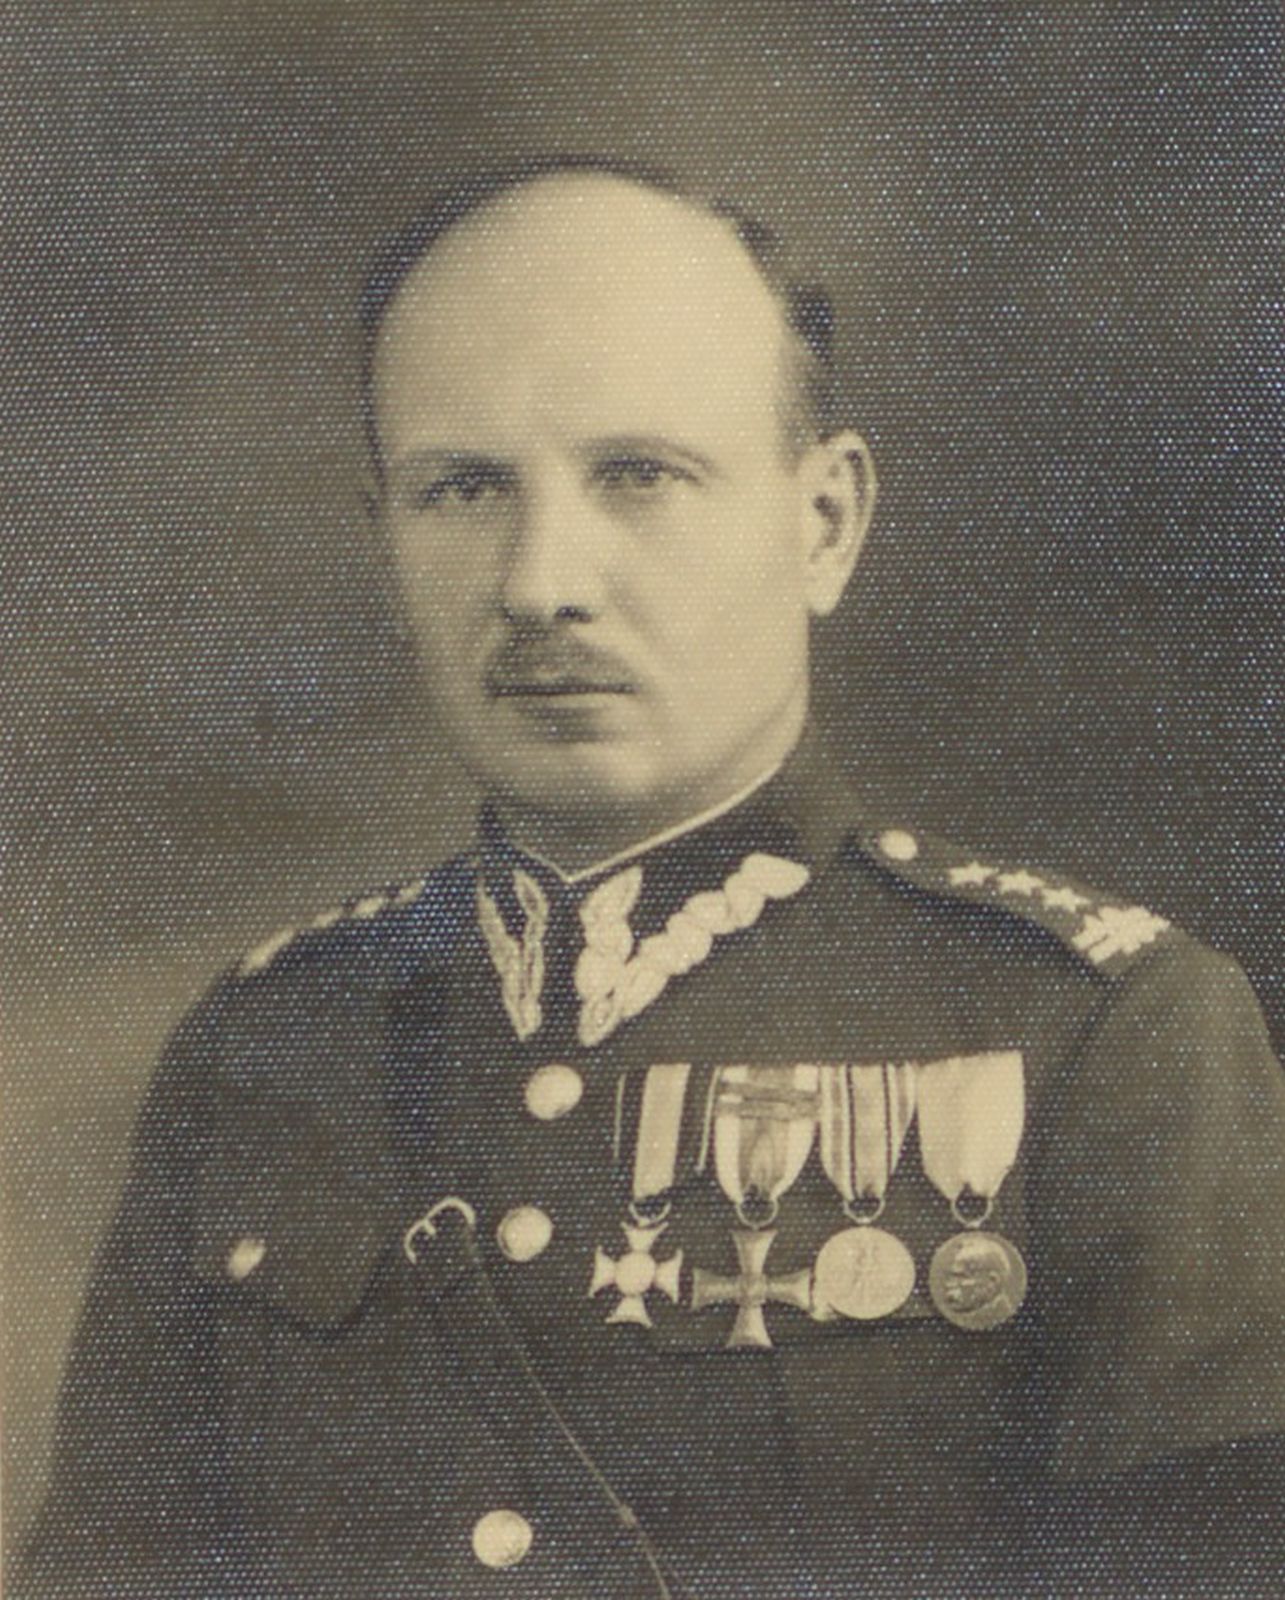 Jan Bokszczanin